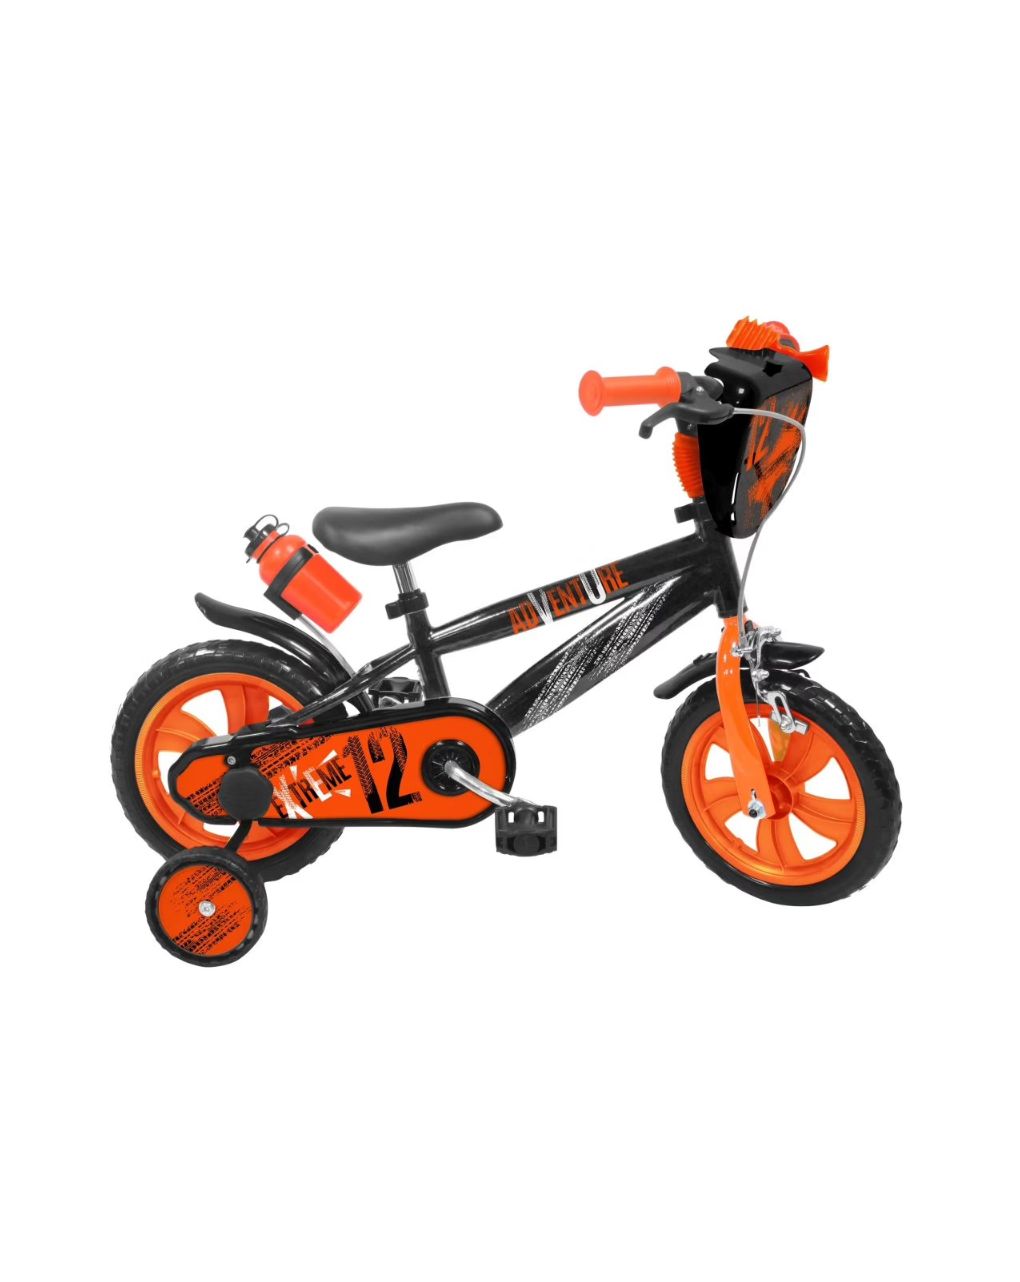 Sun & sport - ποδήλατο 12″ adventure πορτοκαλί-μαύρο